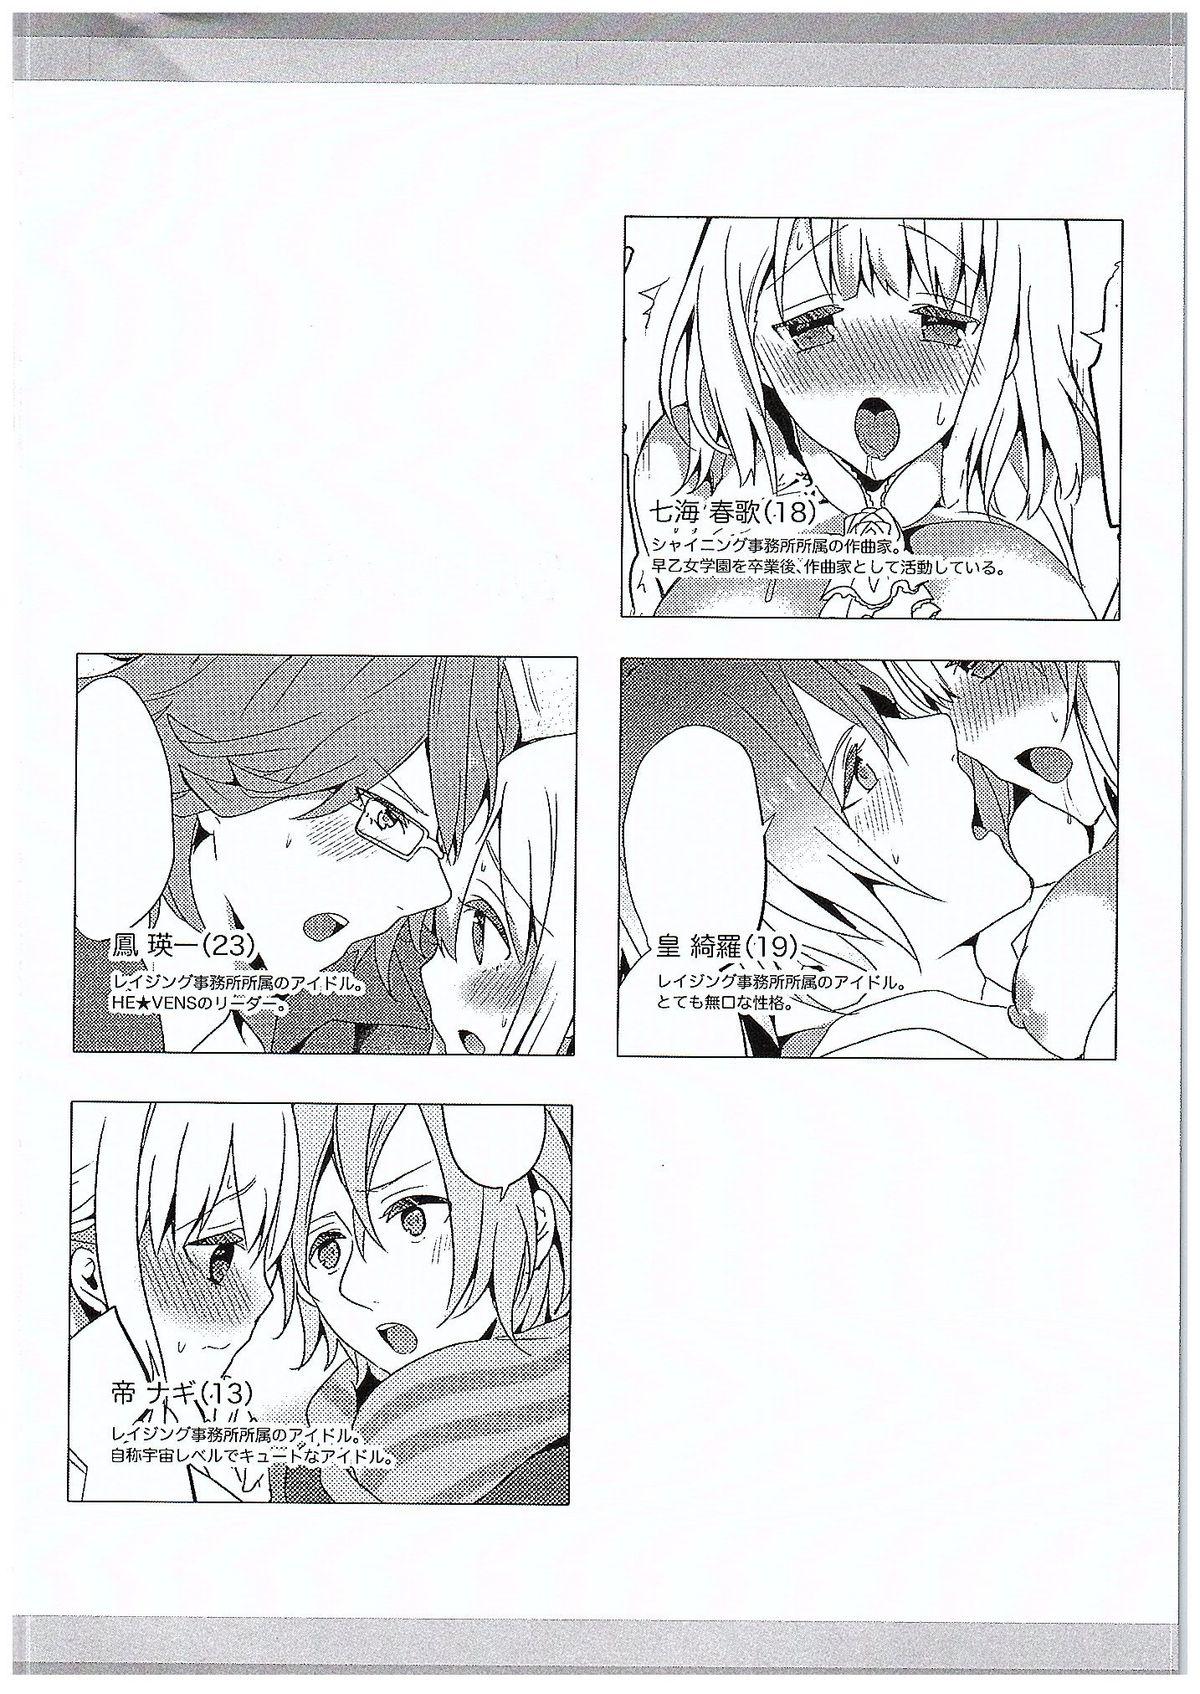 Blows Kiss Game o Oshiete - Uta no prince-sama Pack - Page 3